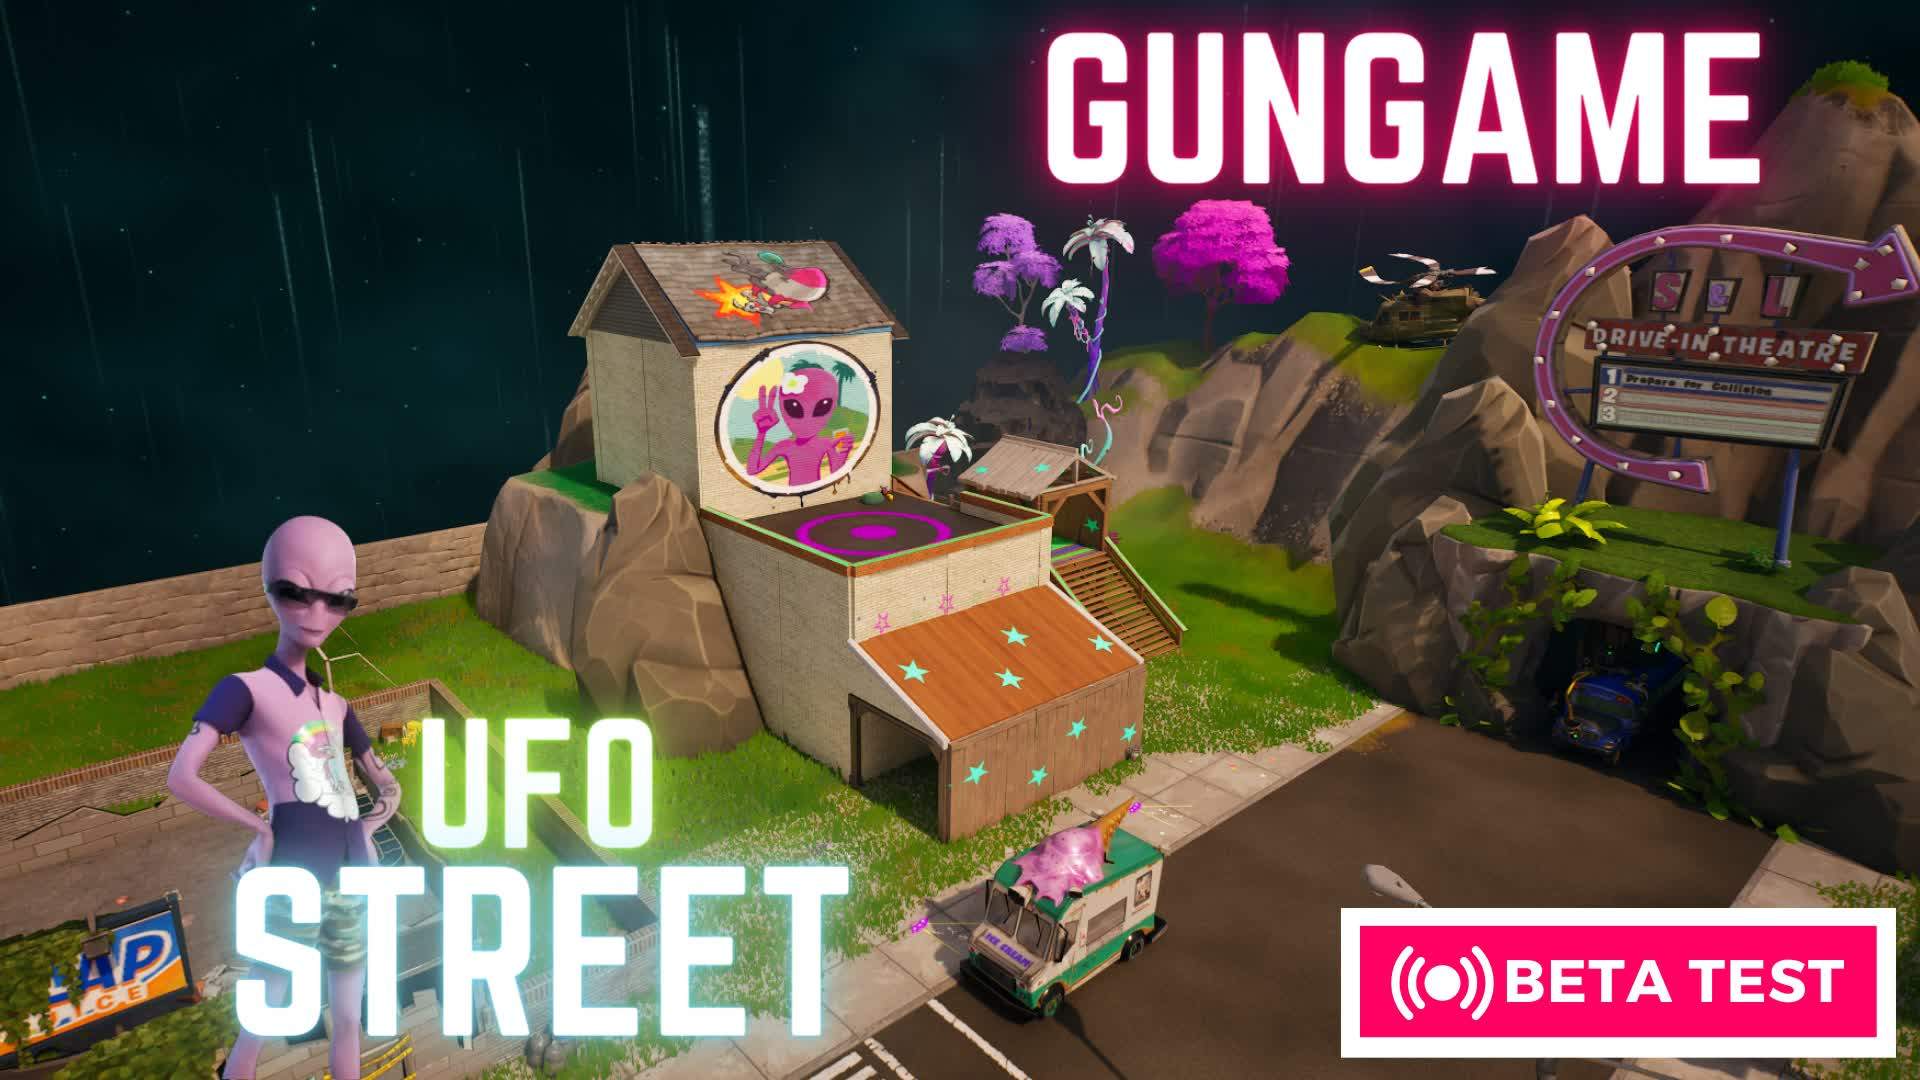 UFO Street GunGame